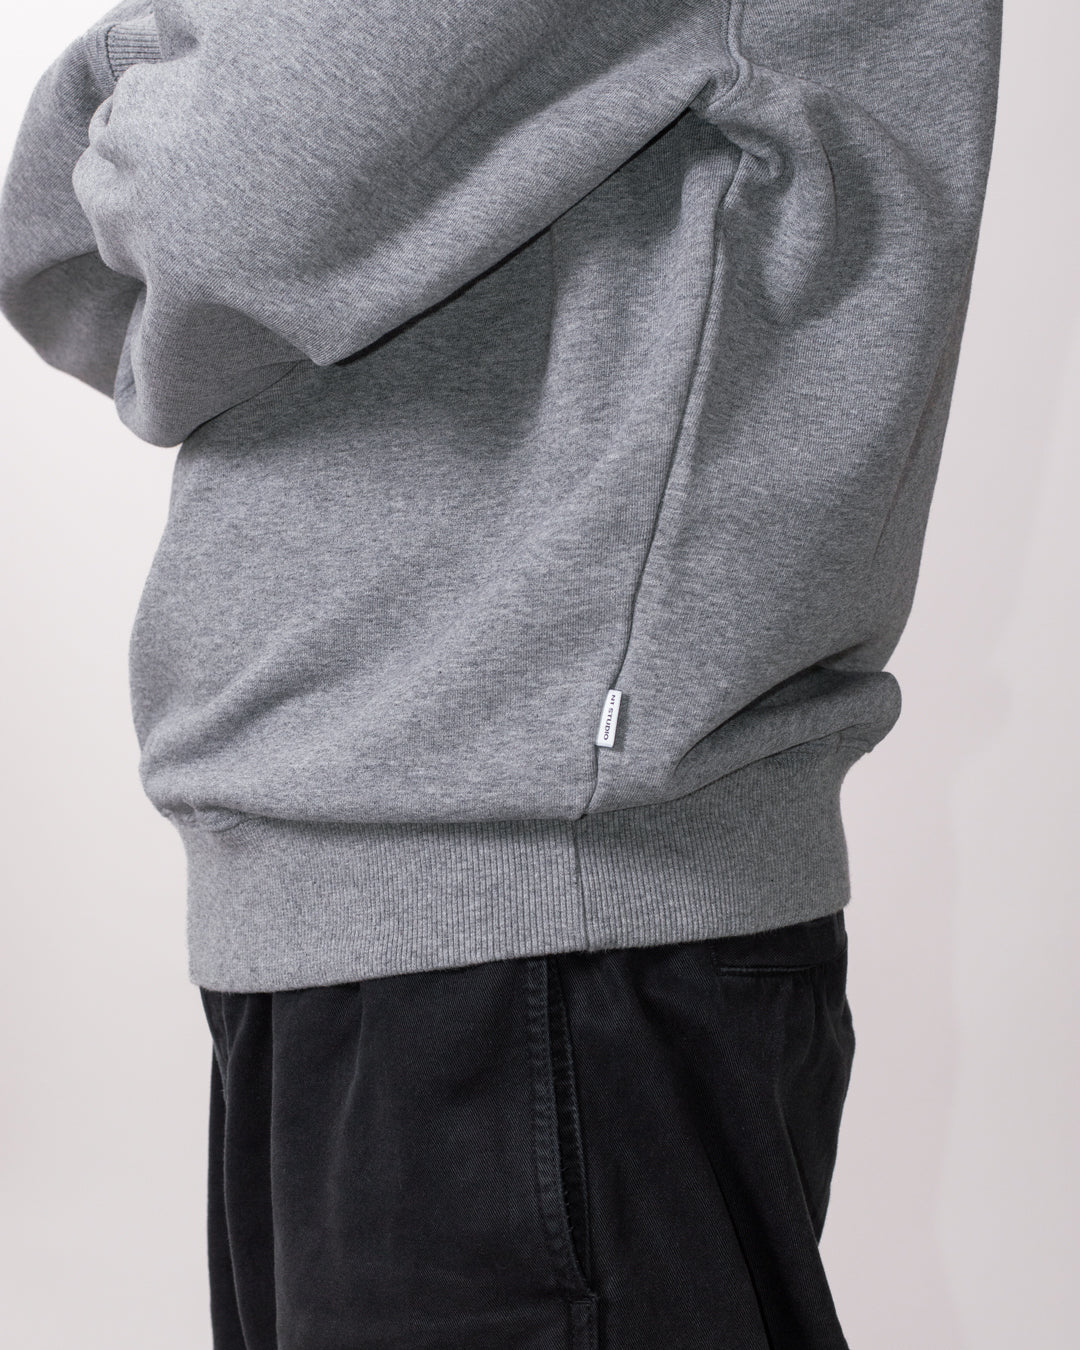 No Talent Studio "Basic Sweater (Sports Grey & Black)"